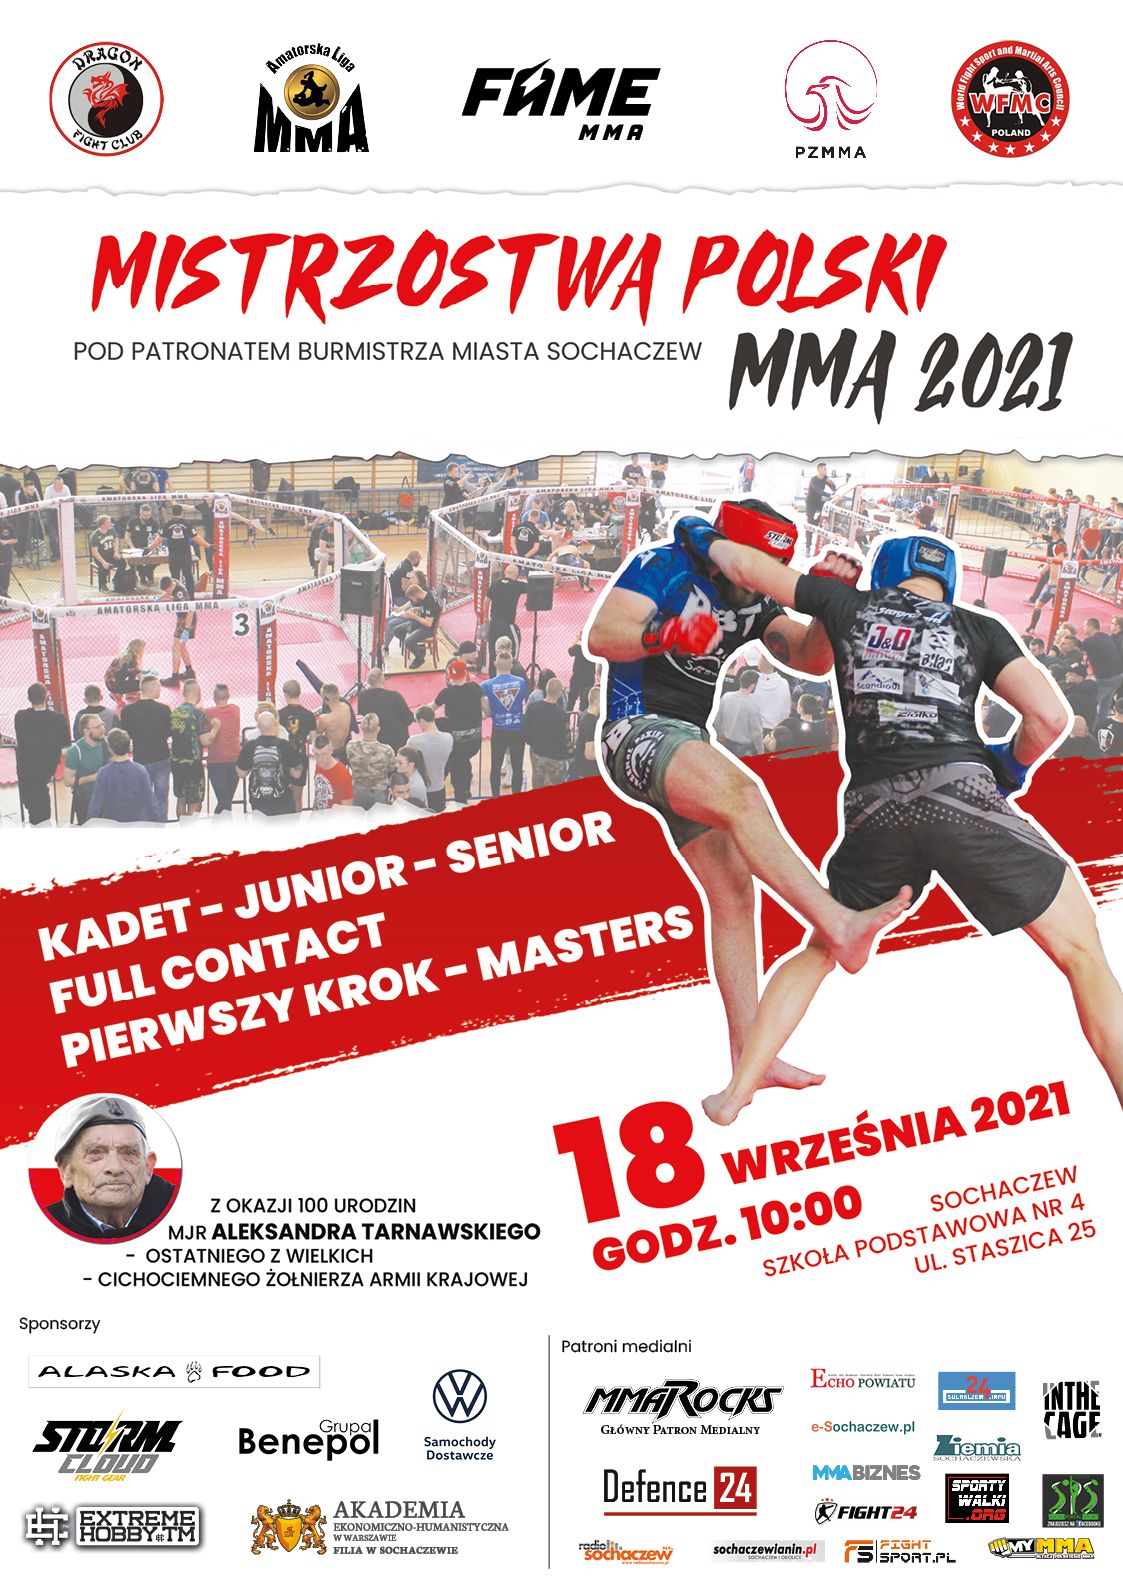 mistrzostwa polski almma 2021